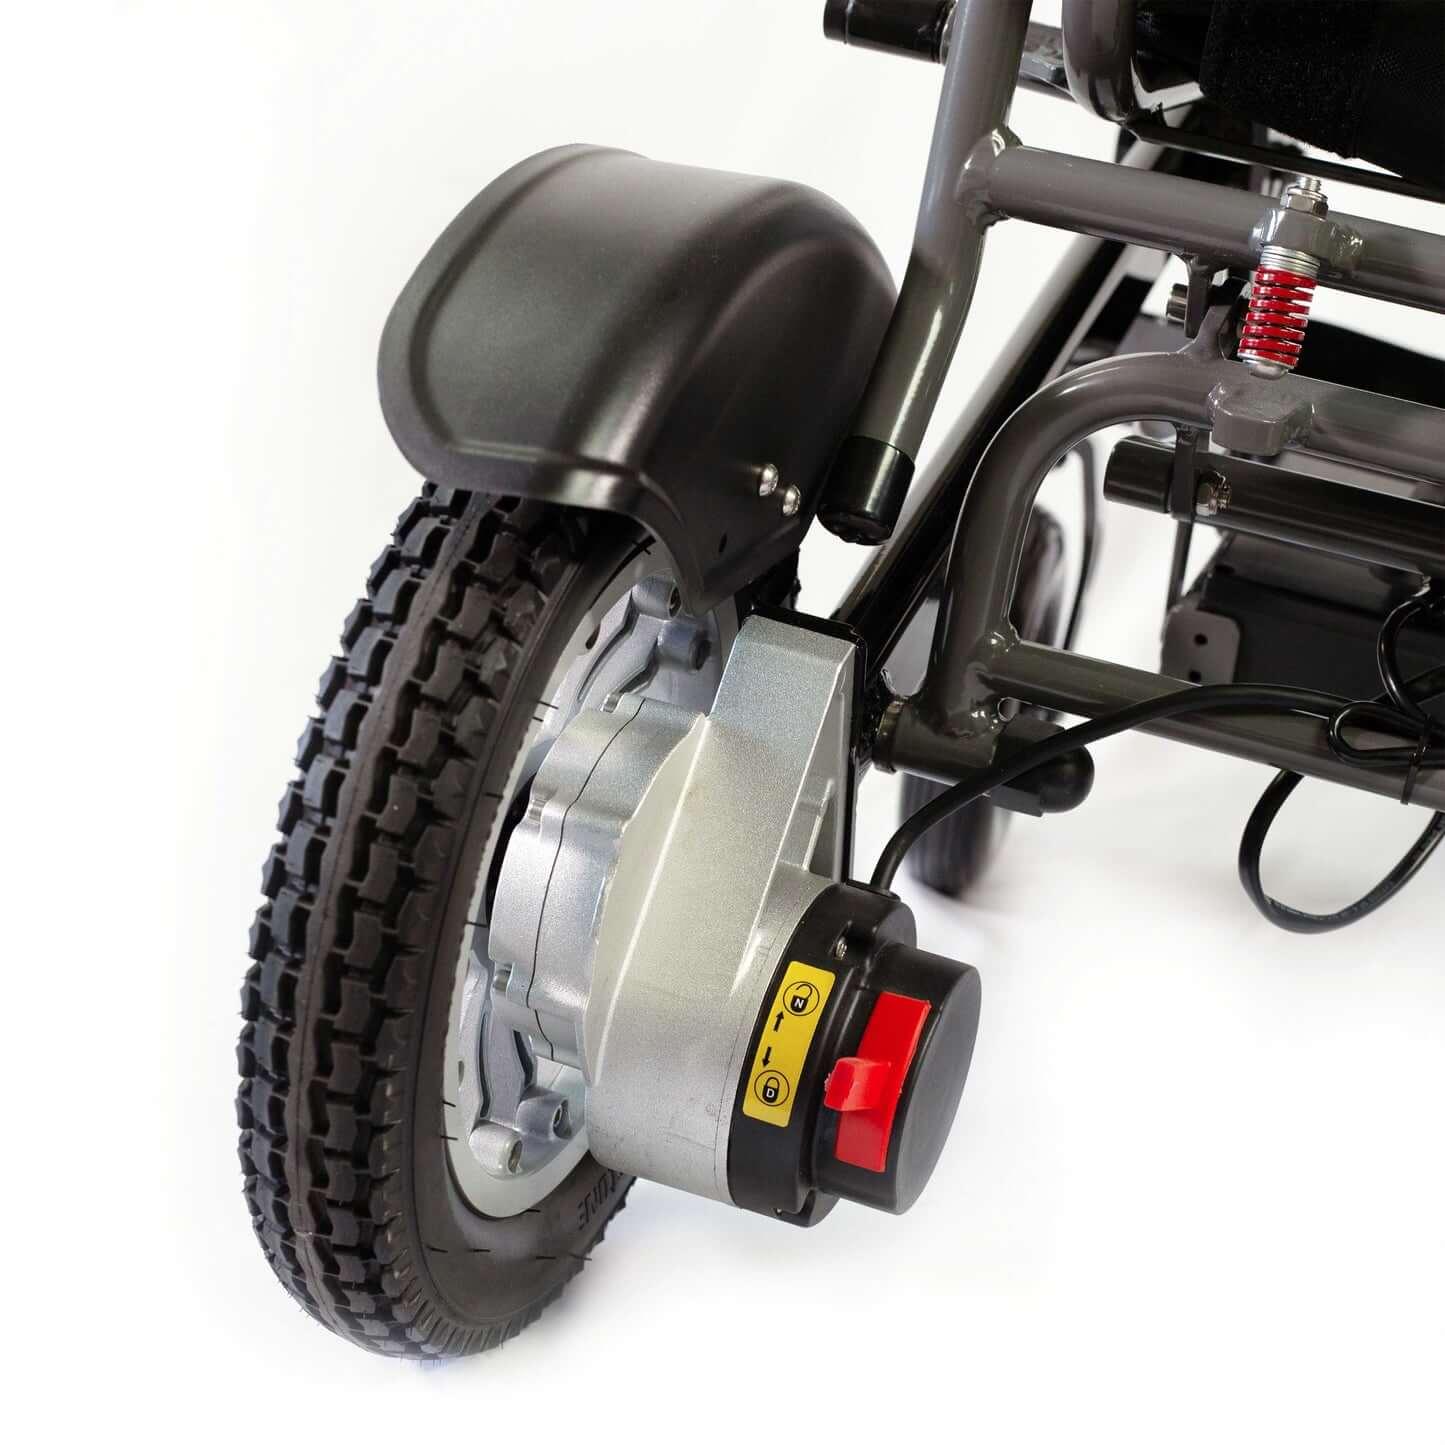 REYHEE Roamer (XW-LY001) 200W 24V Electric Foldable Wheelchair reyhee.com